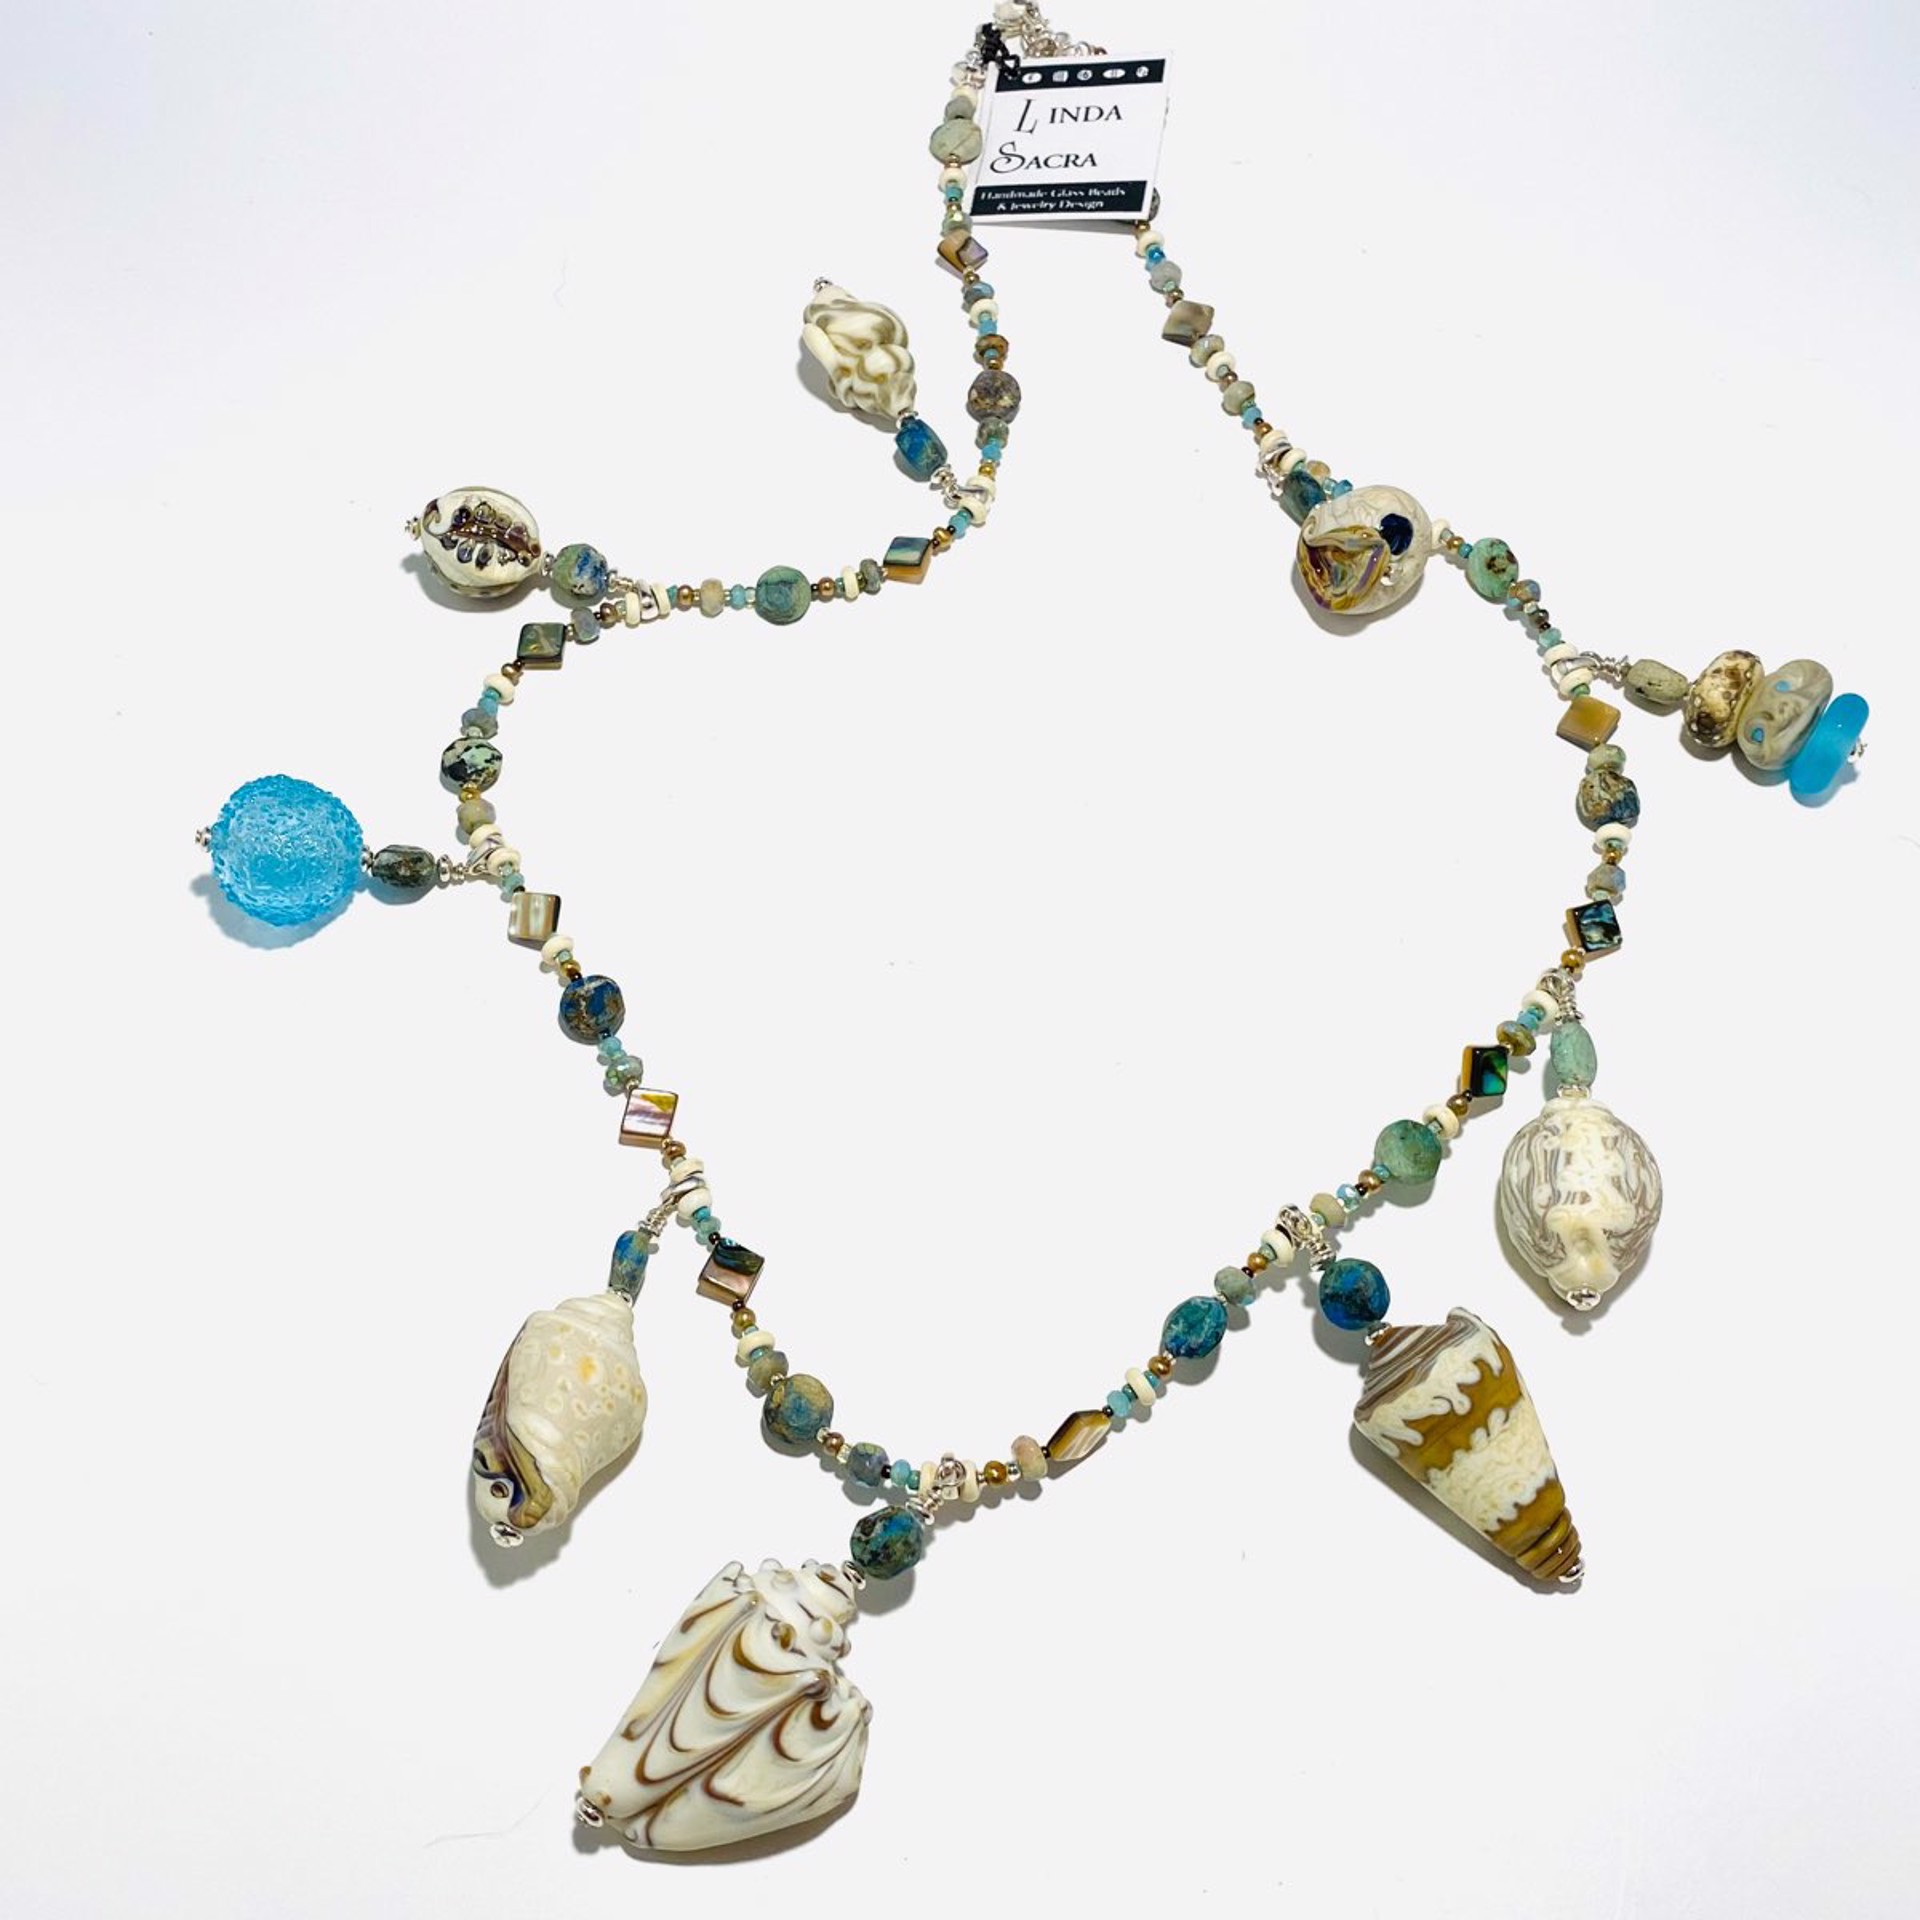 LS22-464 Nine Drops-Shells, Cairn, Hollow Aqua Fritt on Gemstone, Abalone Necklace by Linda Sacra